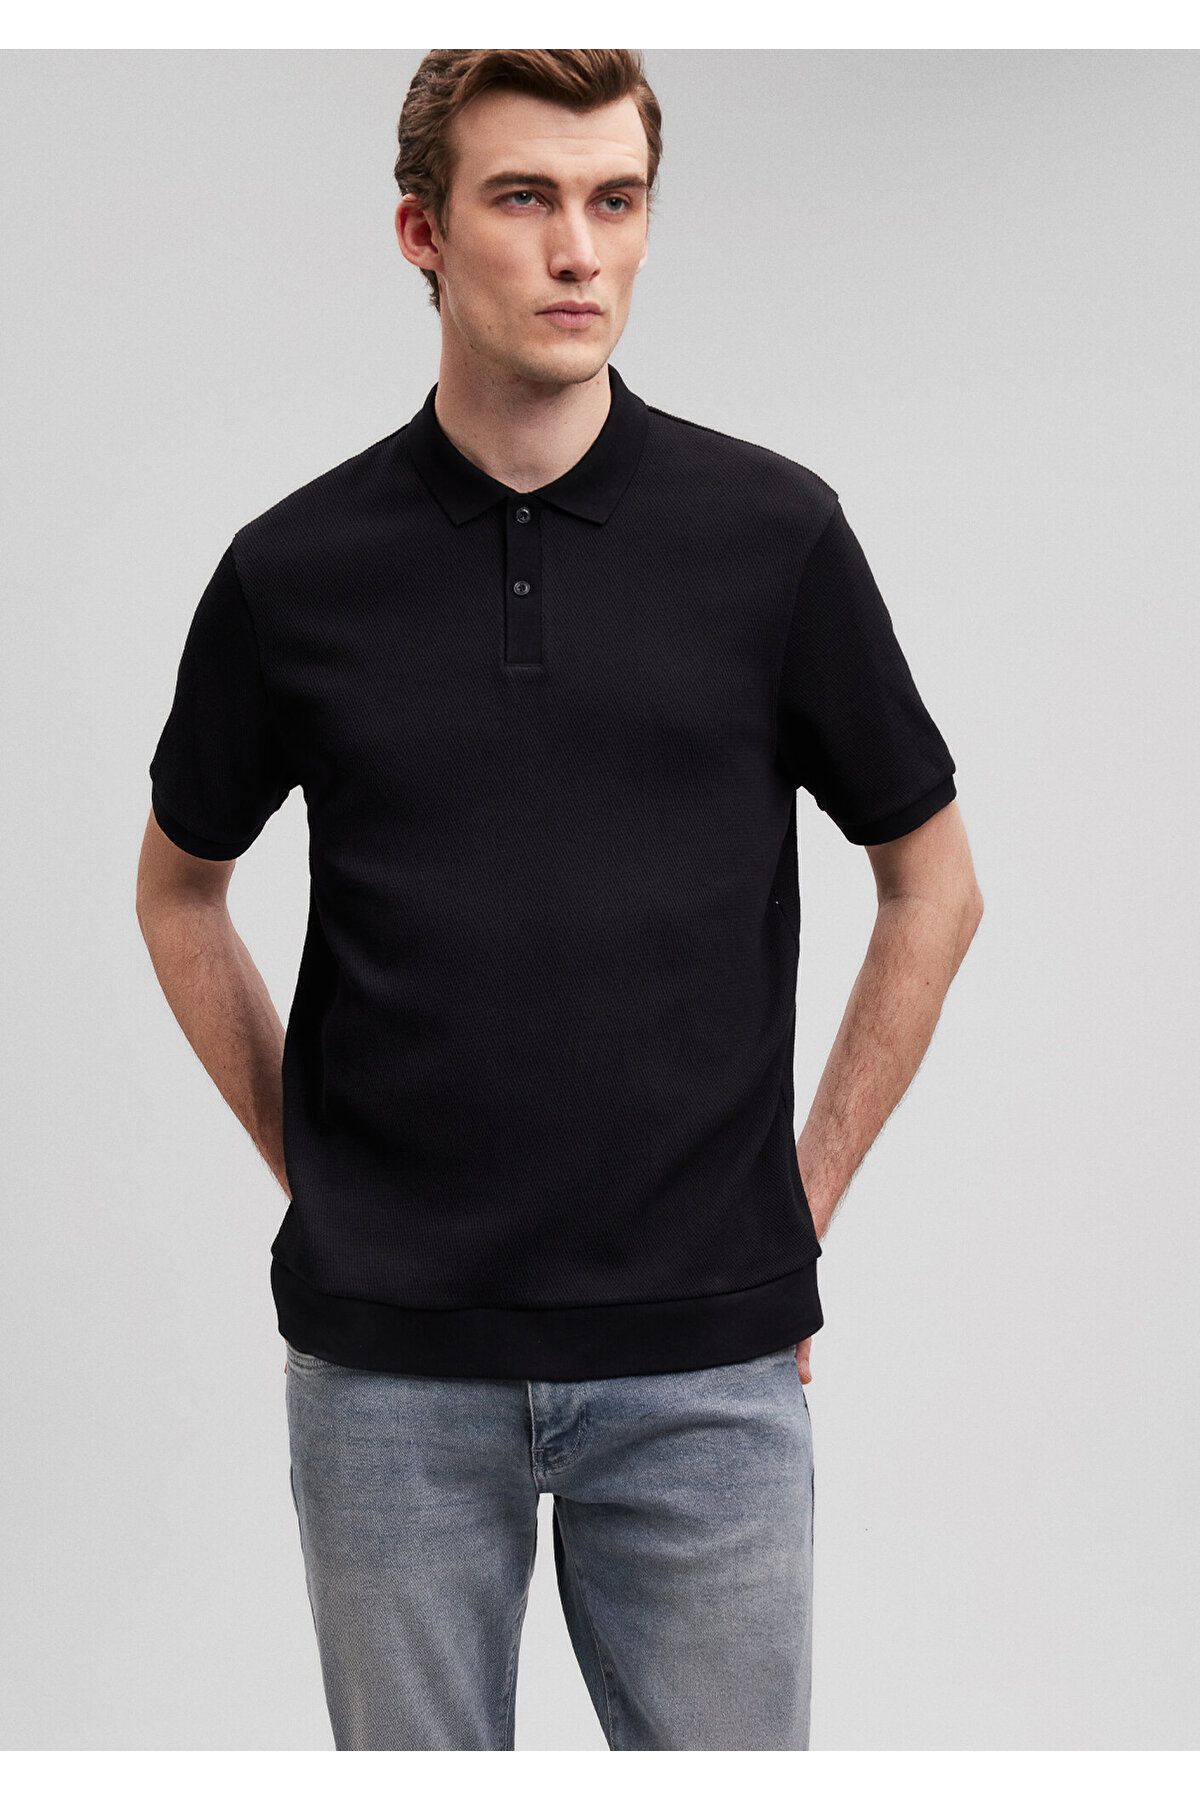 Mavi تی شرت سیاه چوگان مشکی مناسب / برش معمولی 0611844-900